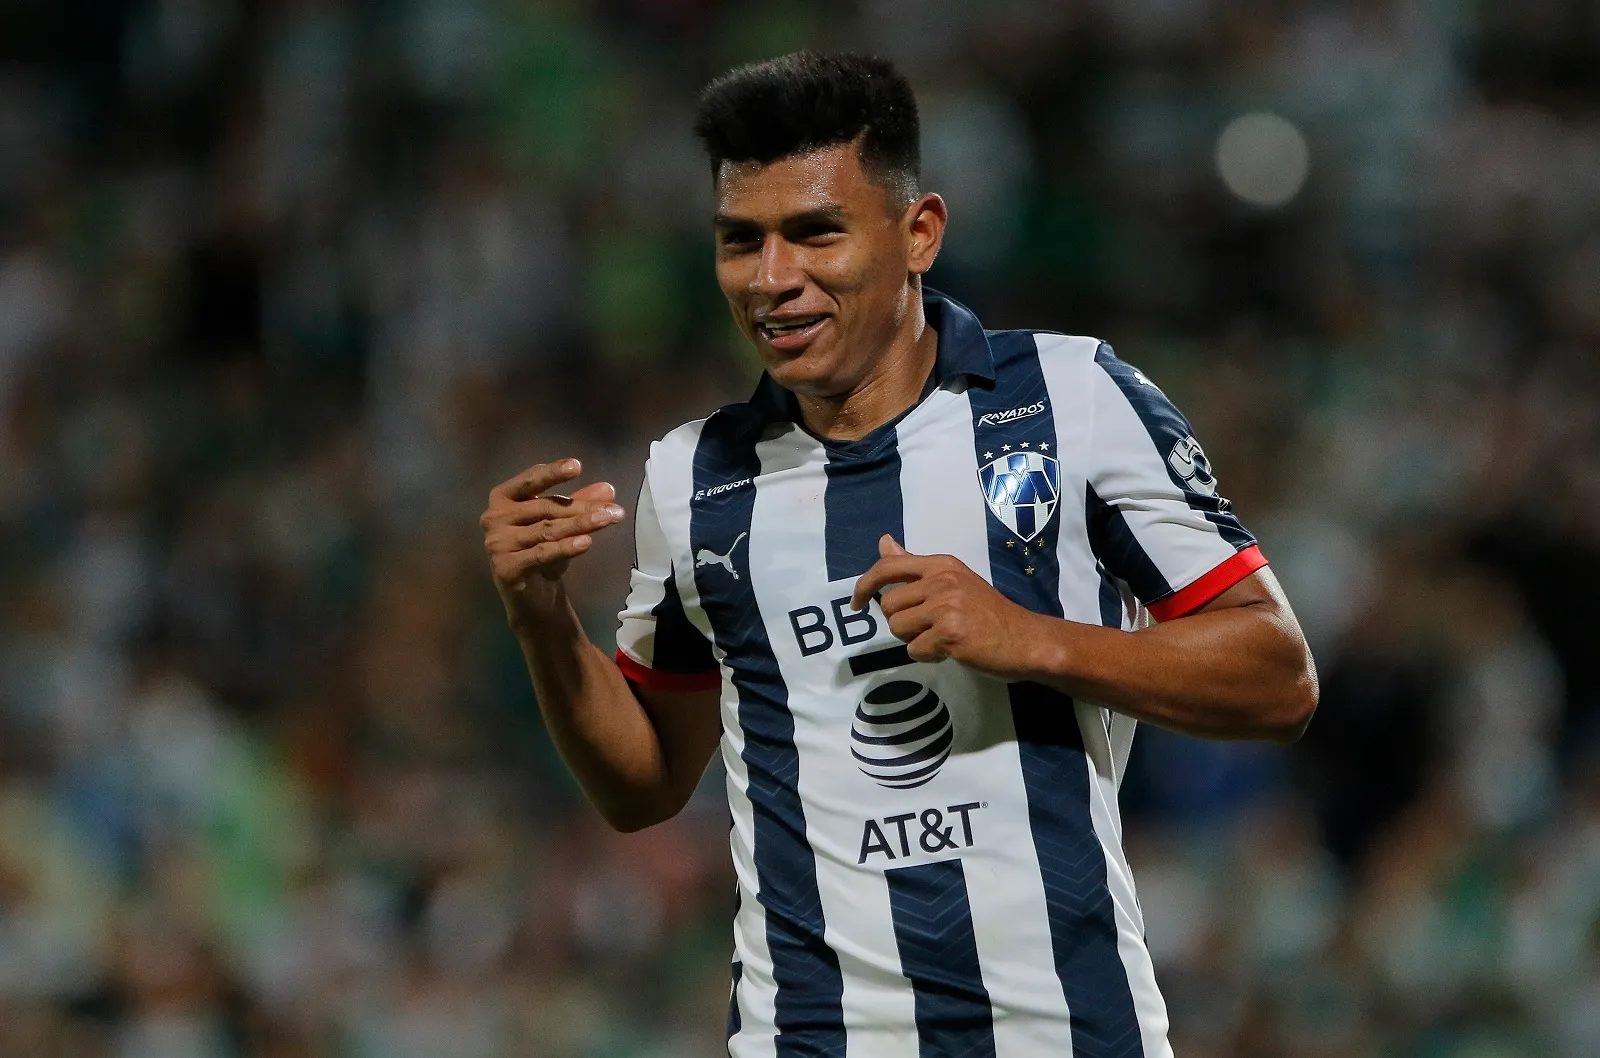 Footballer Jesus Gallardo of Monterrey has been handed a two-match ban